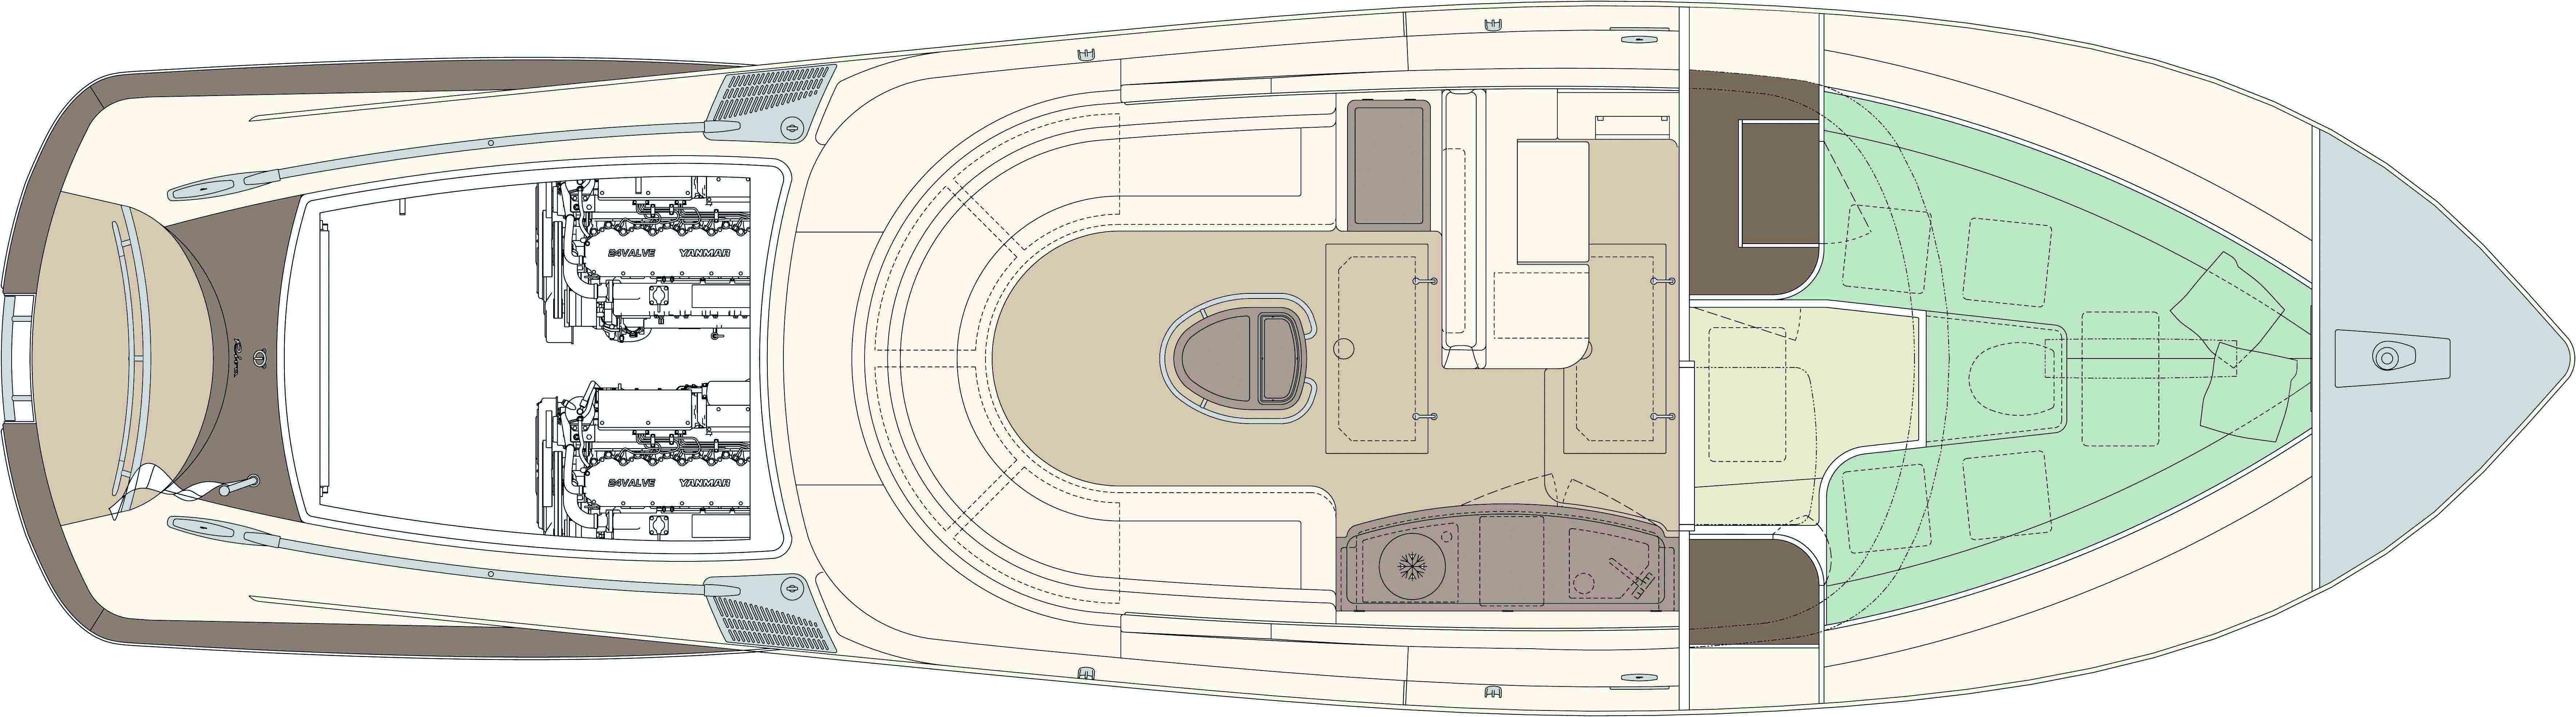 Manufacturer Provided Image: Riva Aquariva Super Lower Deck Layout Plan